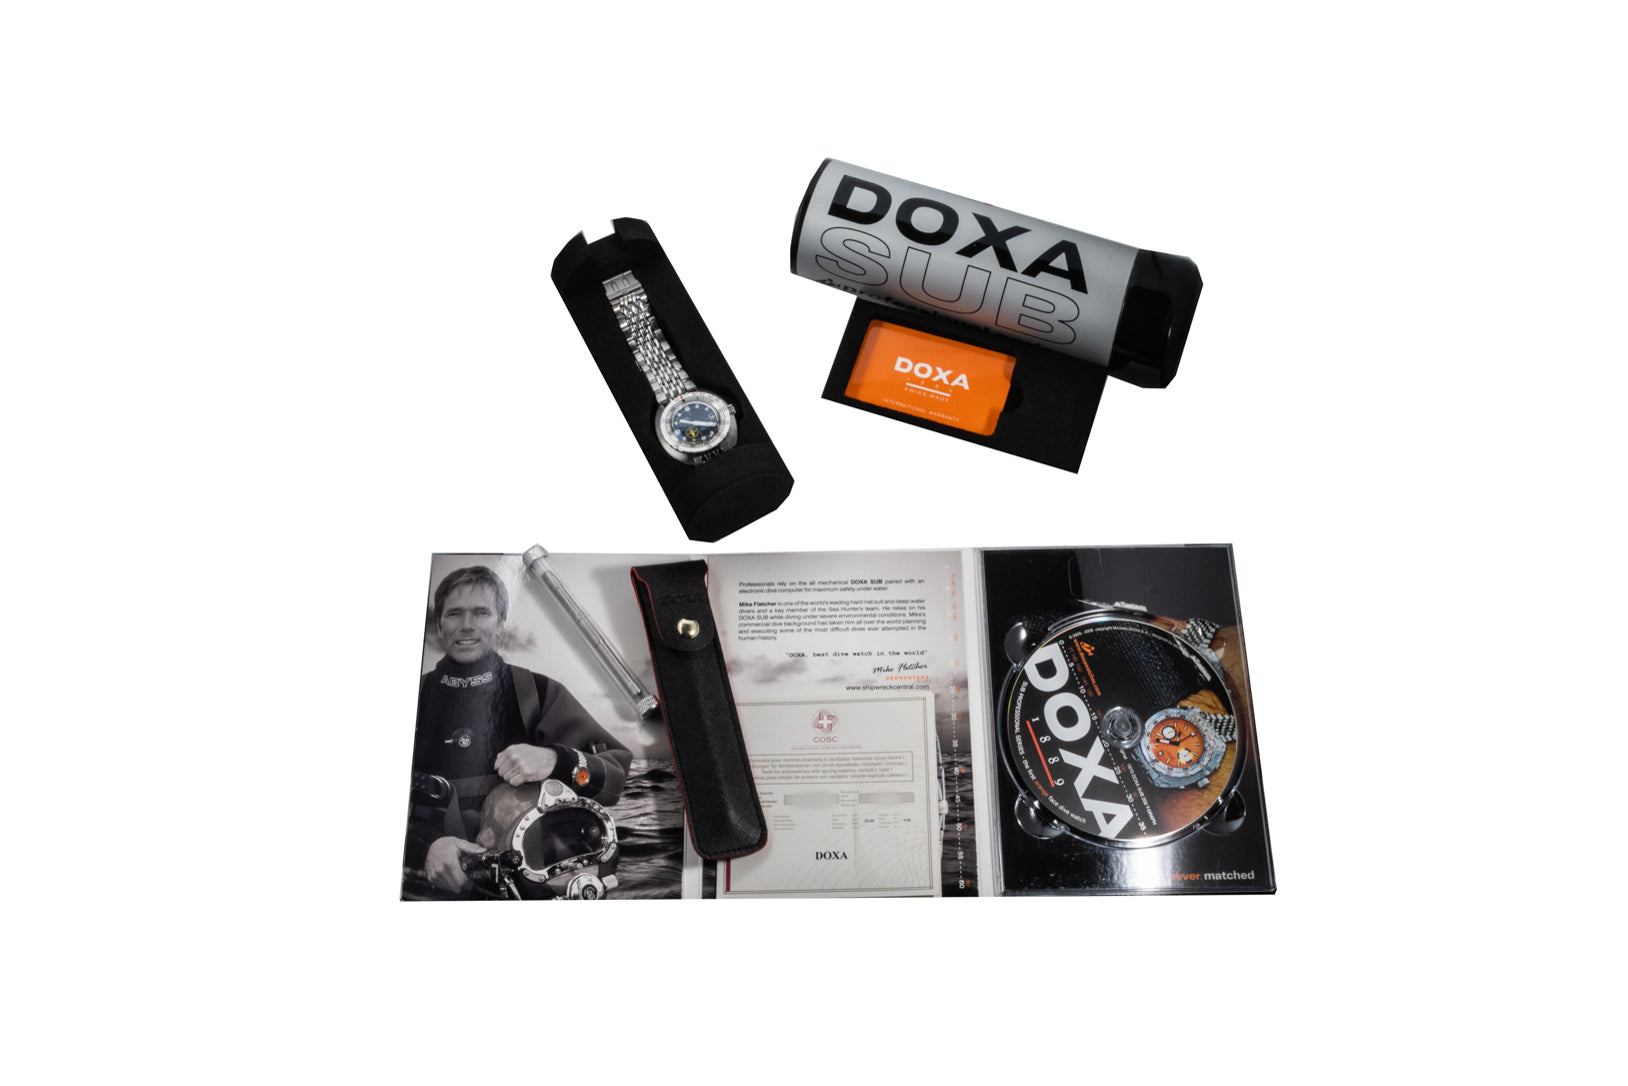 DOXA Sub 300 Sharkhunter 'Blacklung' Limited Edition – Analog:Shift